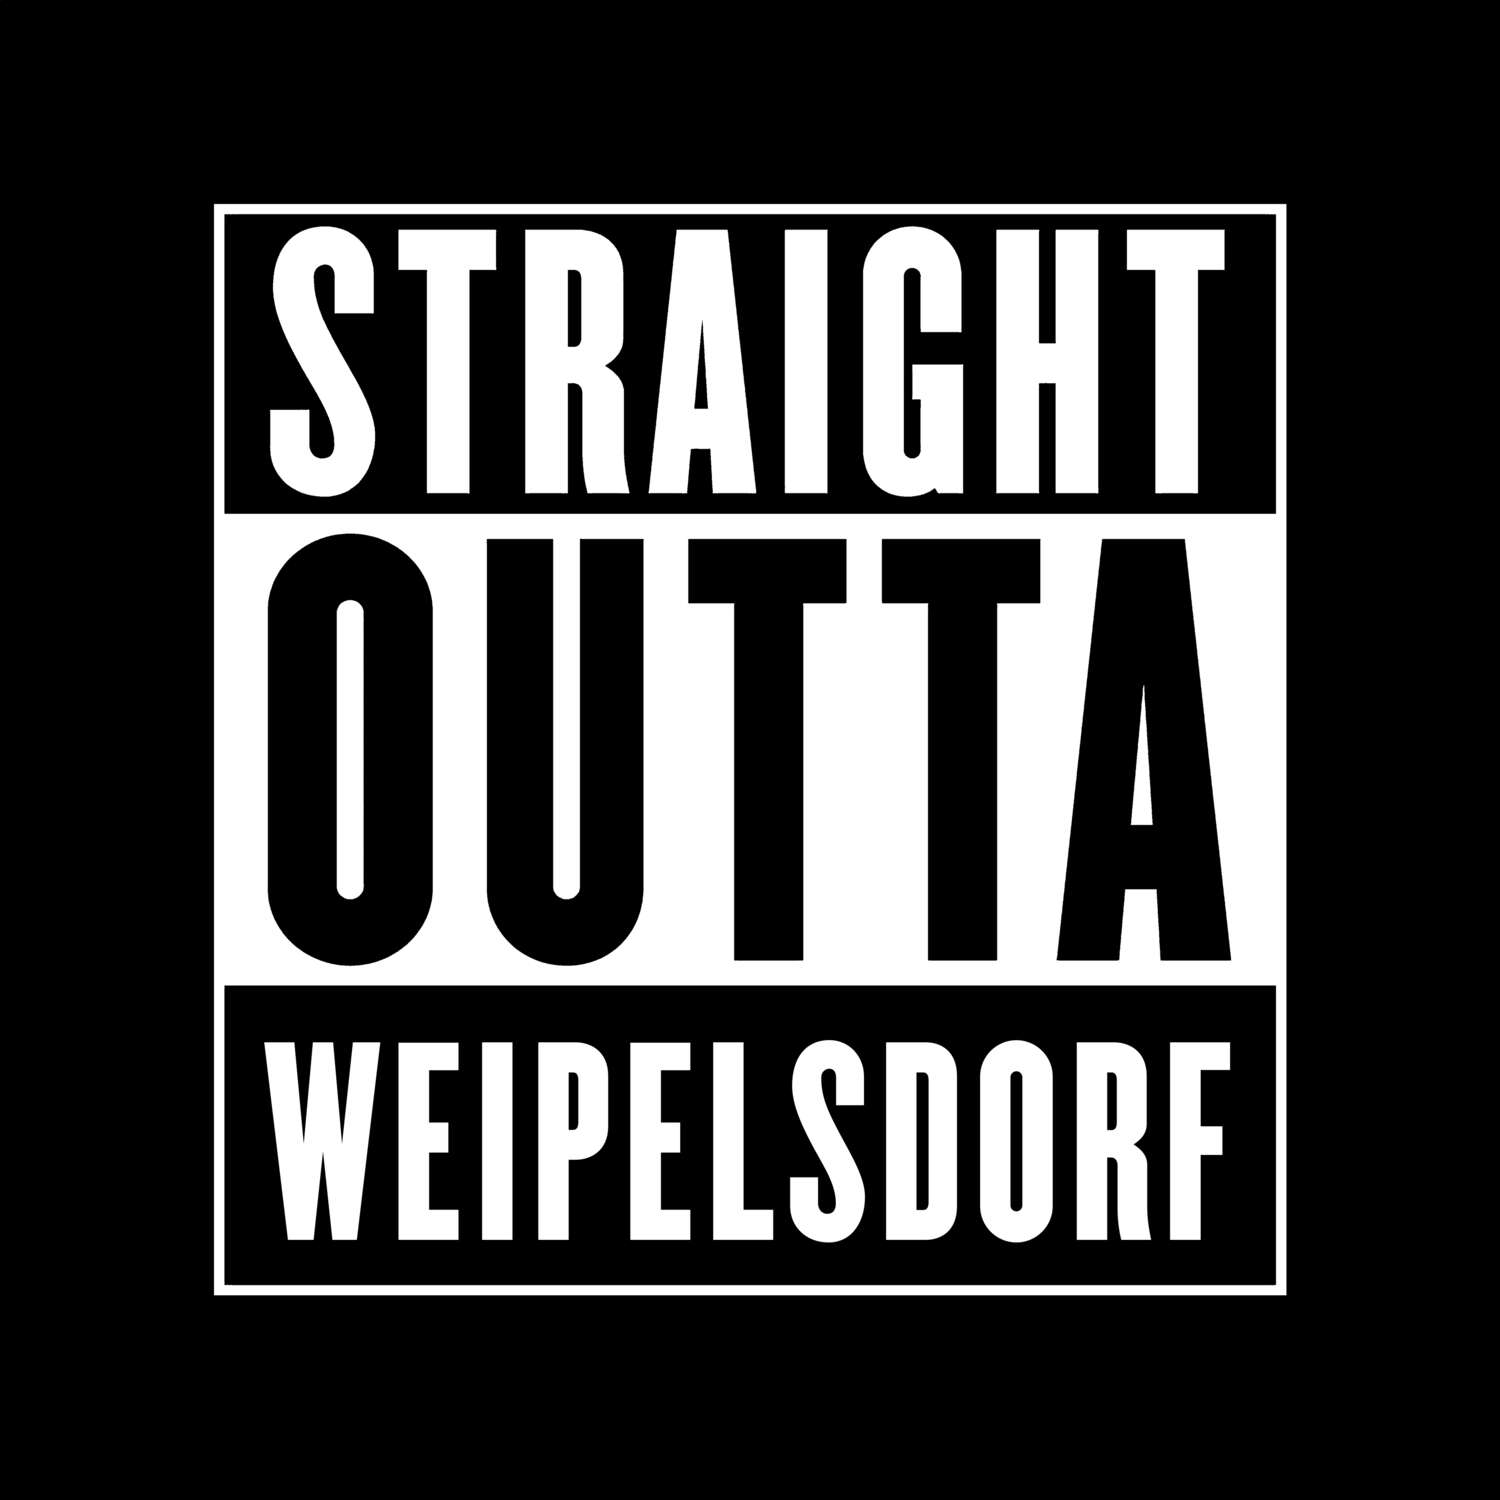 Weipelsdorf T-Shirt »Straight Outta«